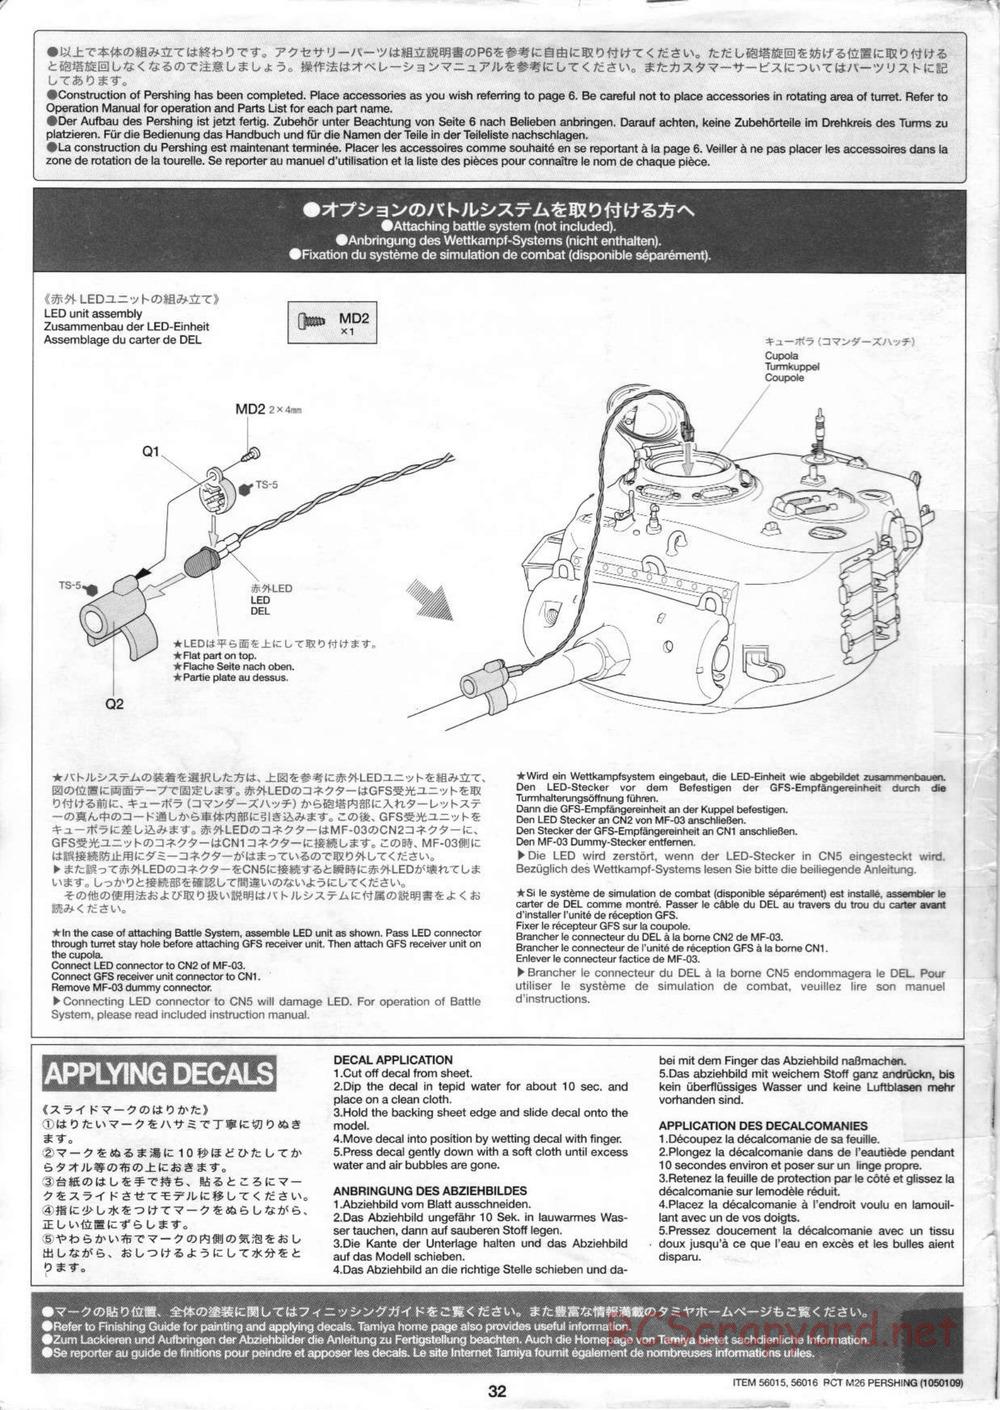 Tamiya - M26 Pershing - 1/16 Scale Chassis - Manual - Page 32